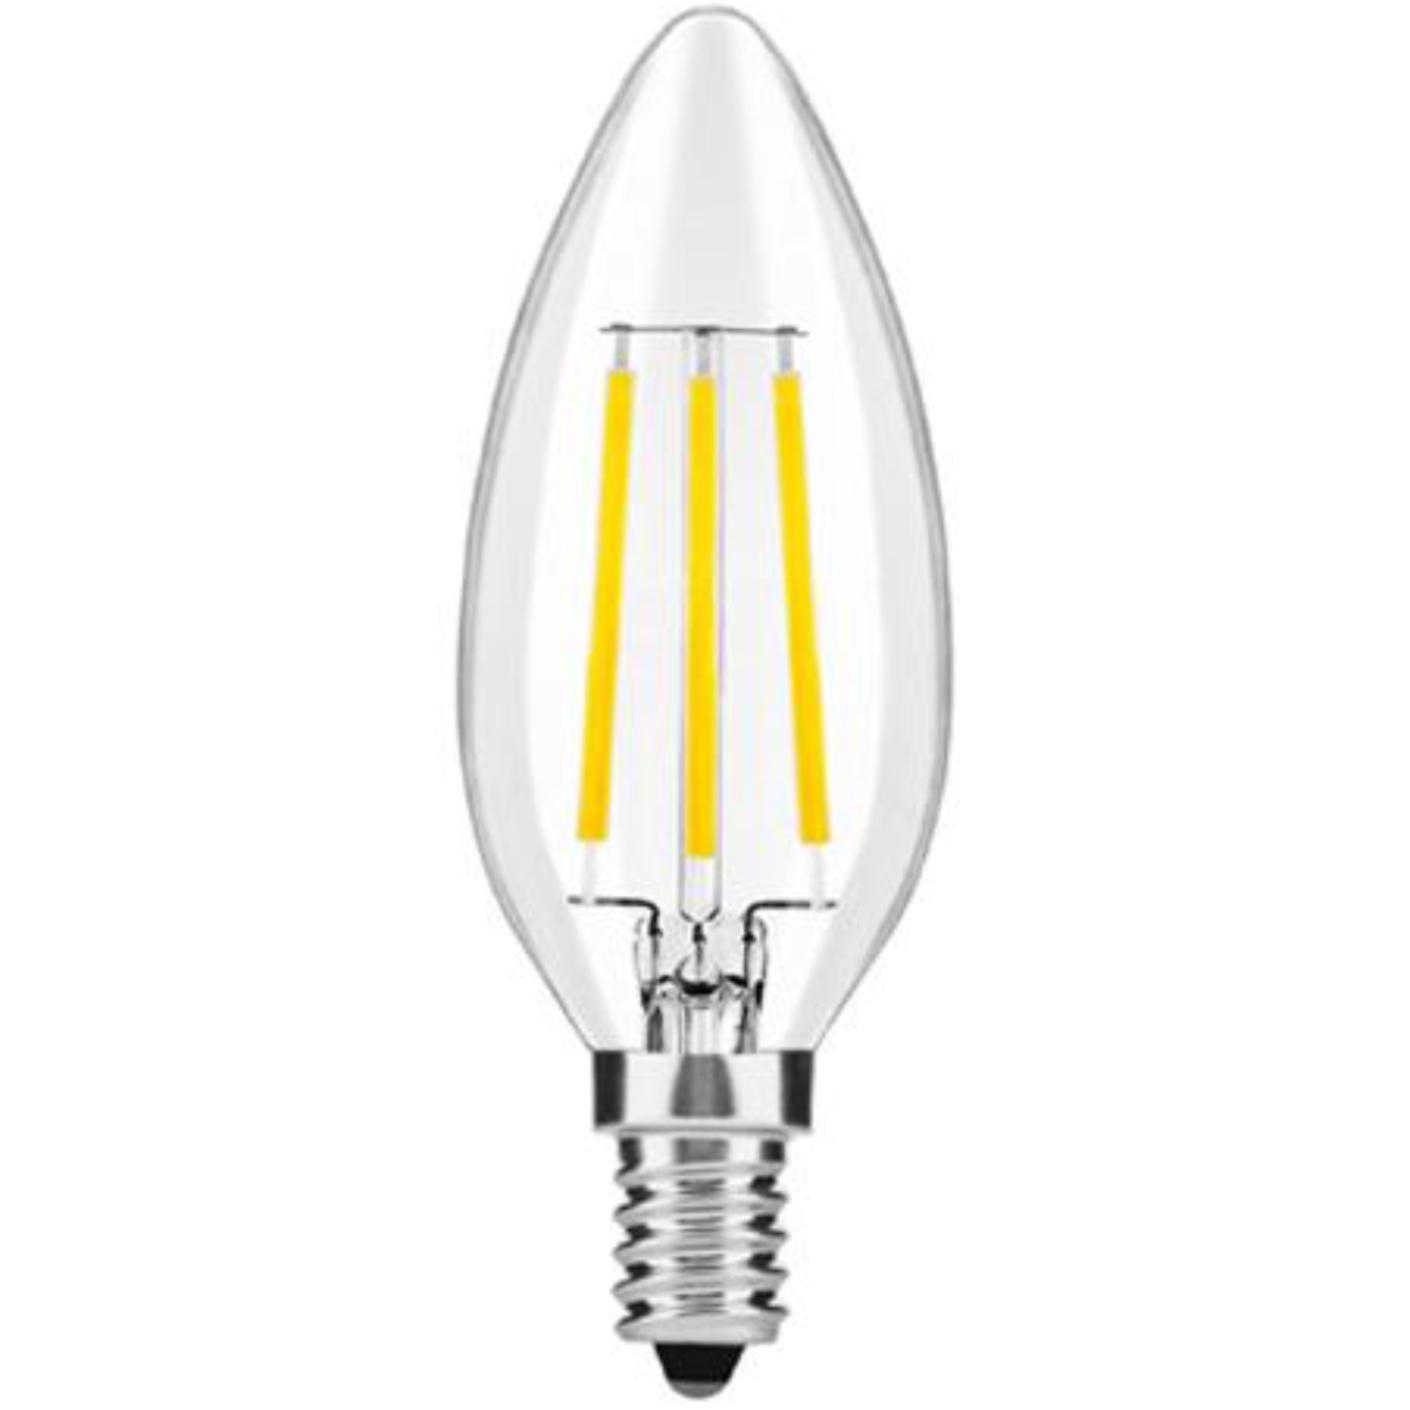 Filament Led Lamp - 480 Lumen